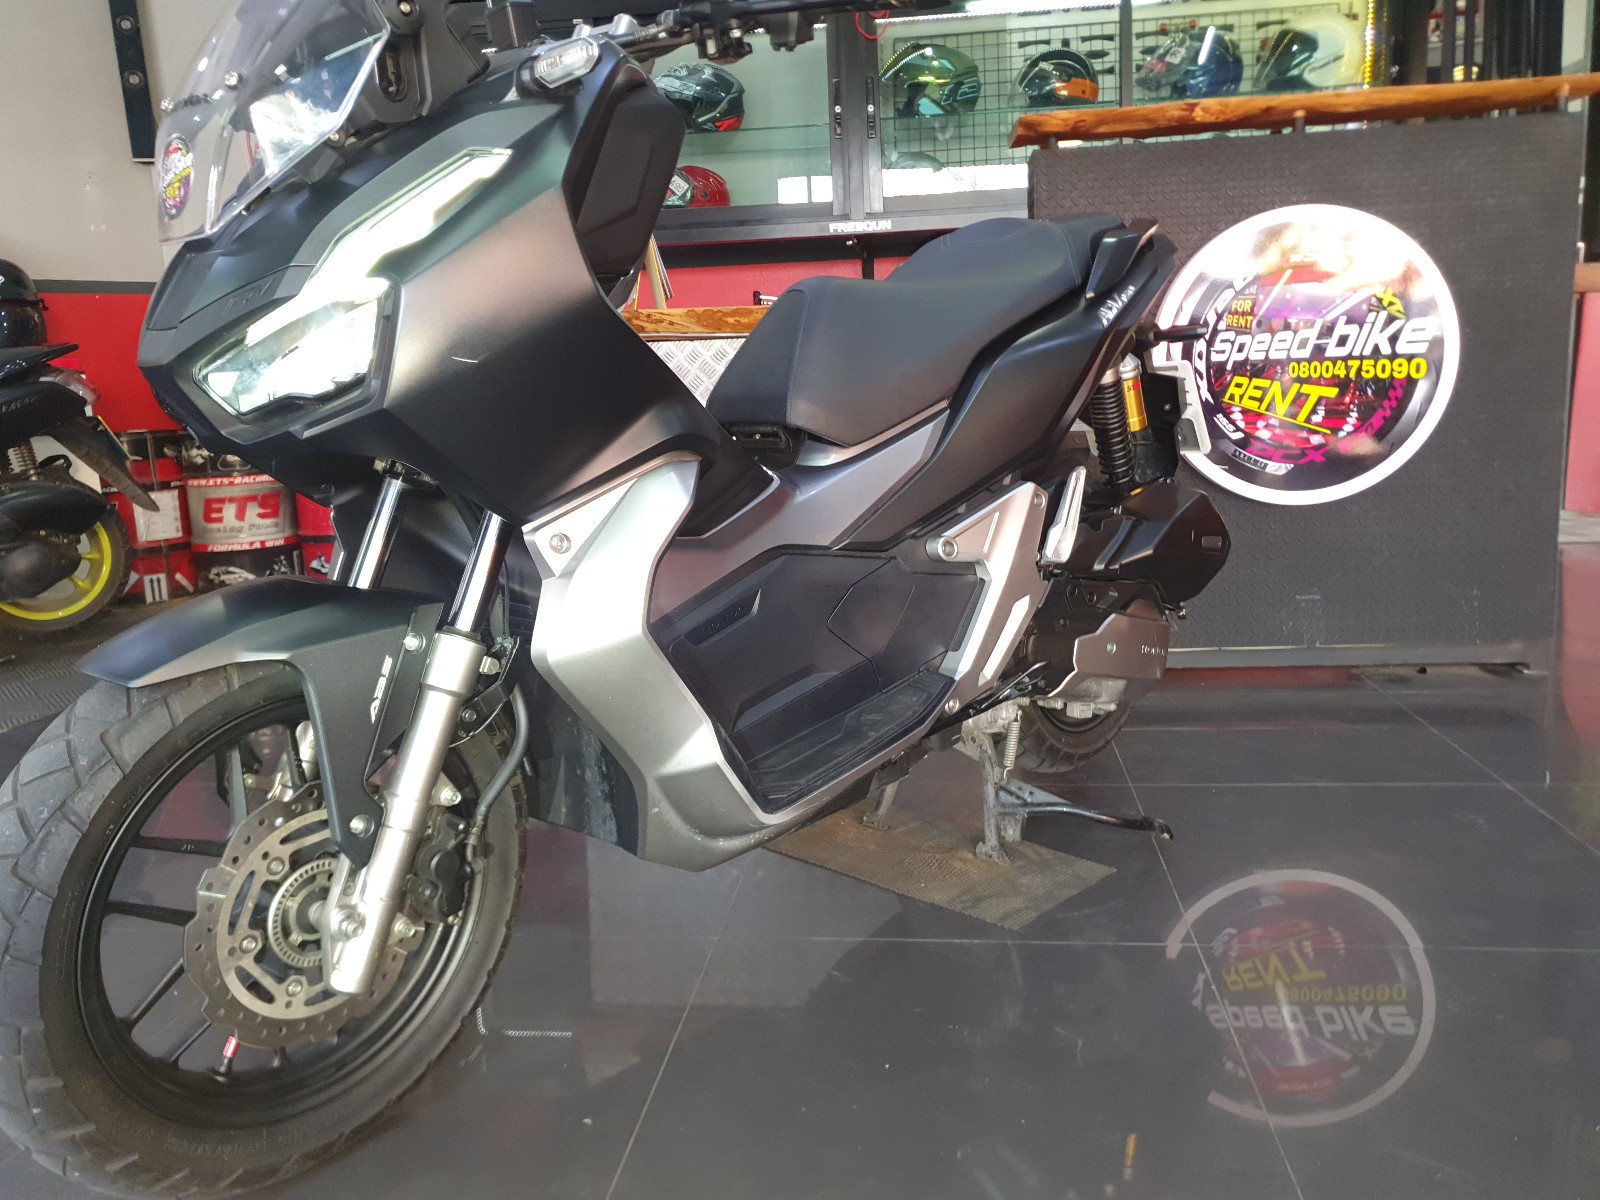 Hire motorcycle Pattaya